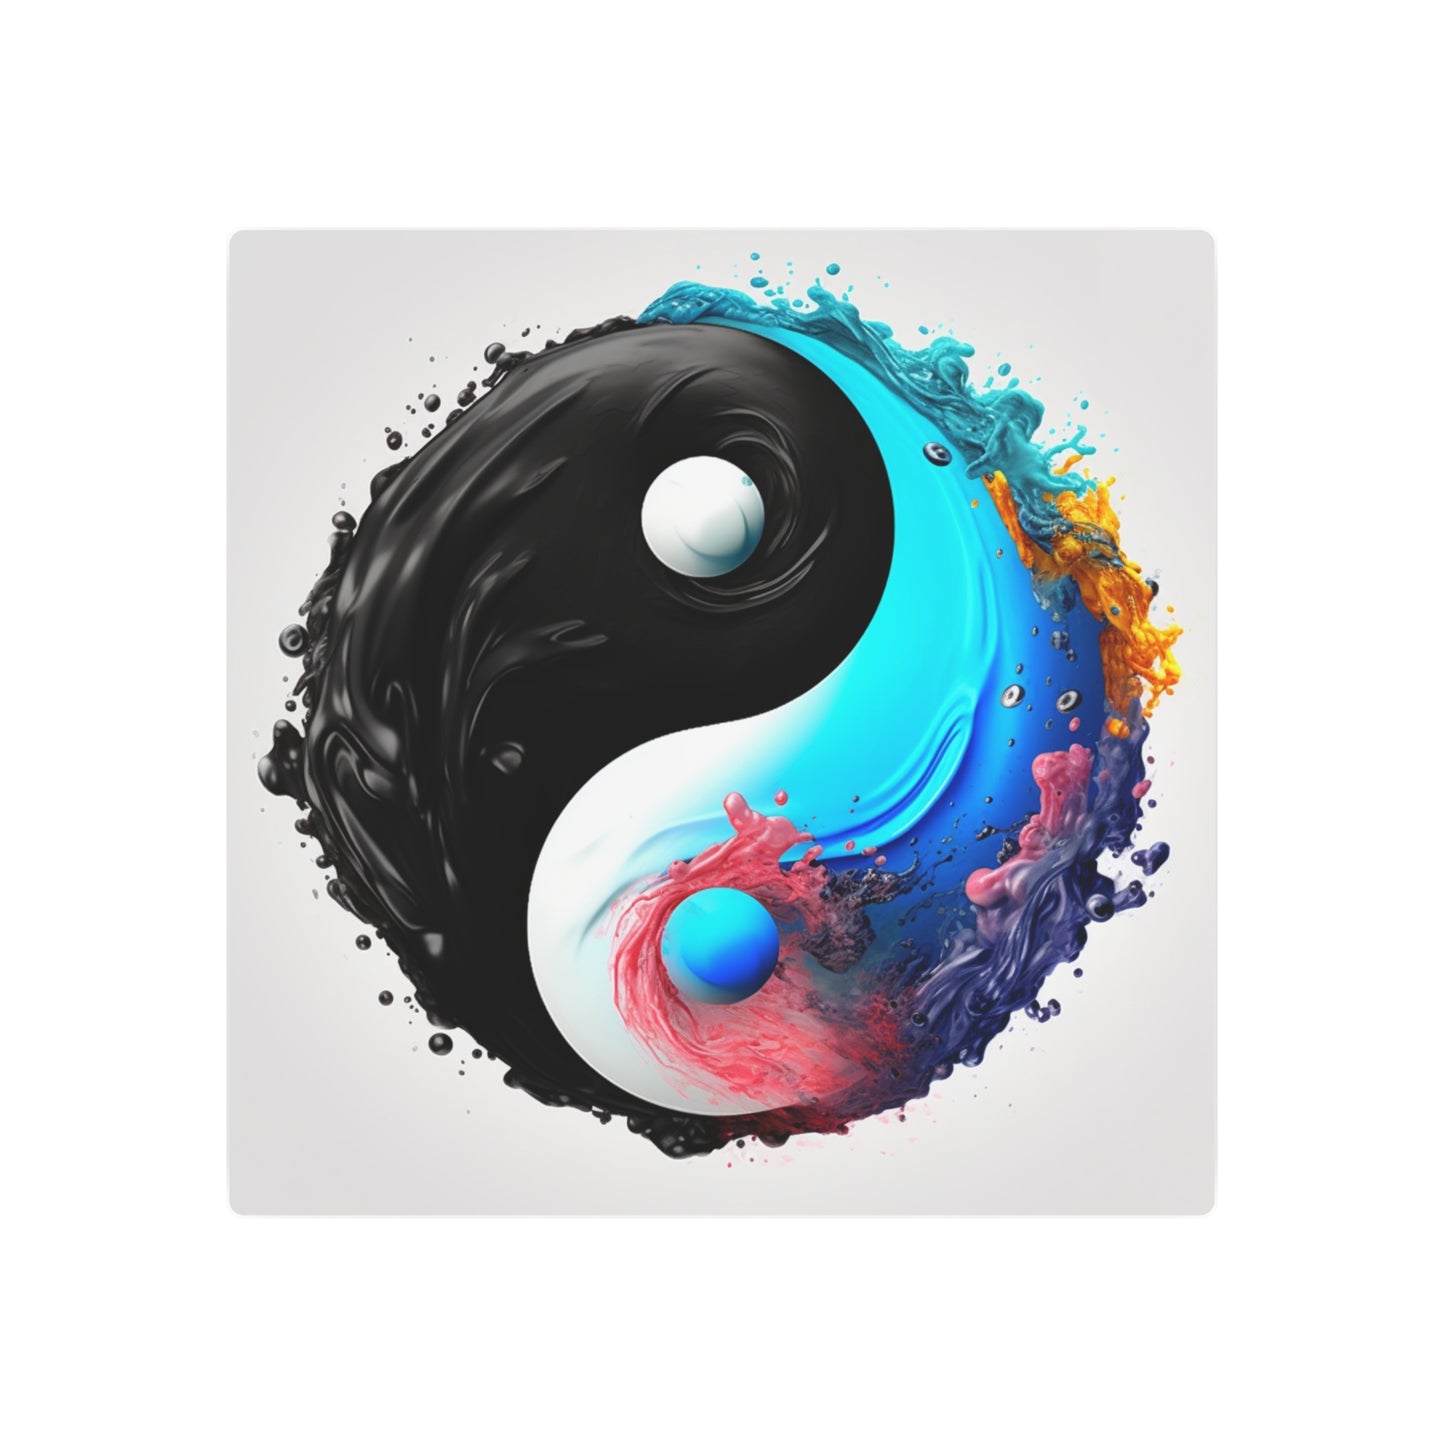 Yin Yang Symbol, Colorful Paint Style - Artistic Decor - Metal Art Sign